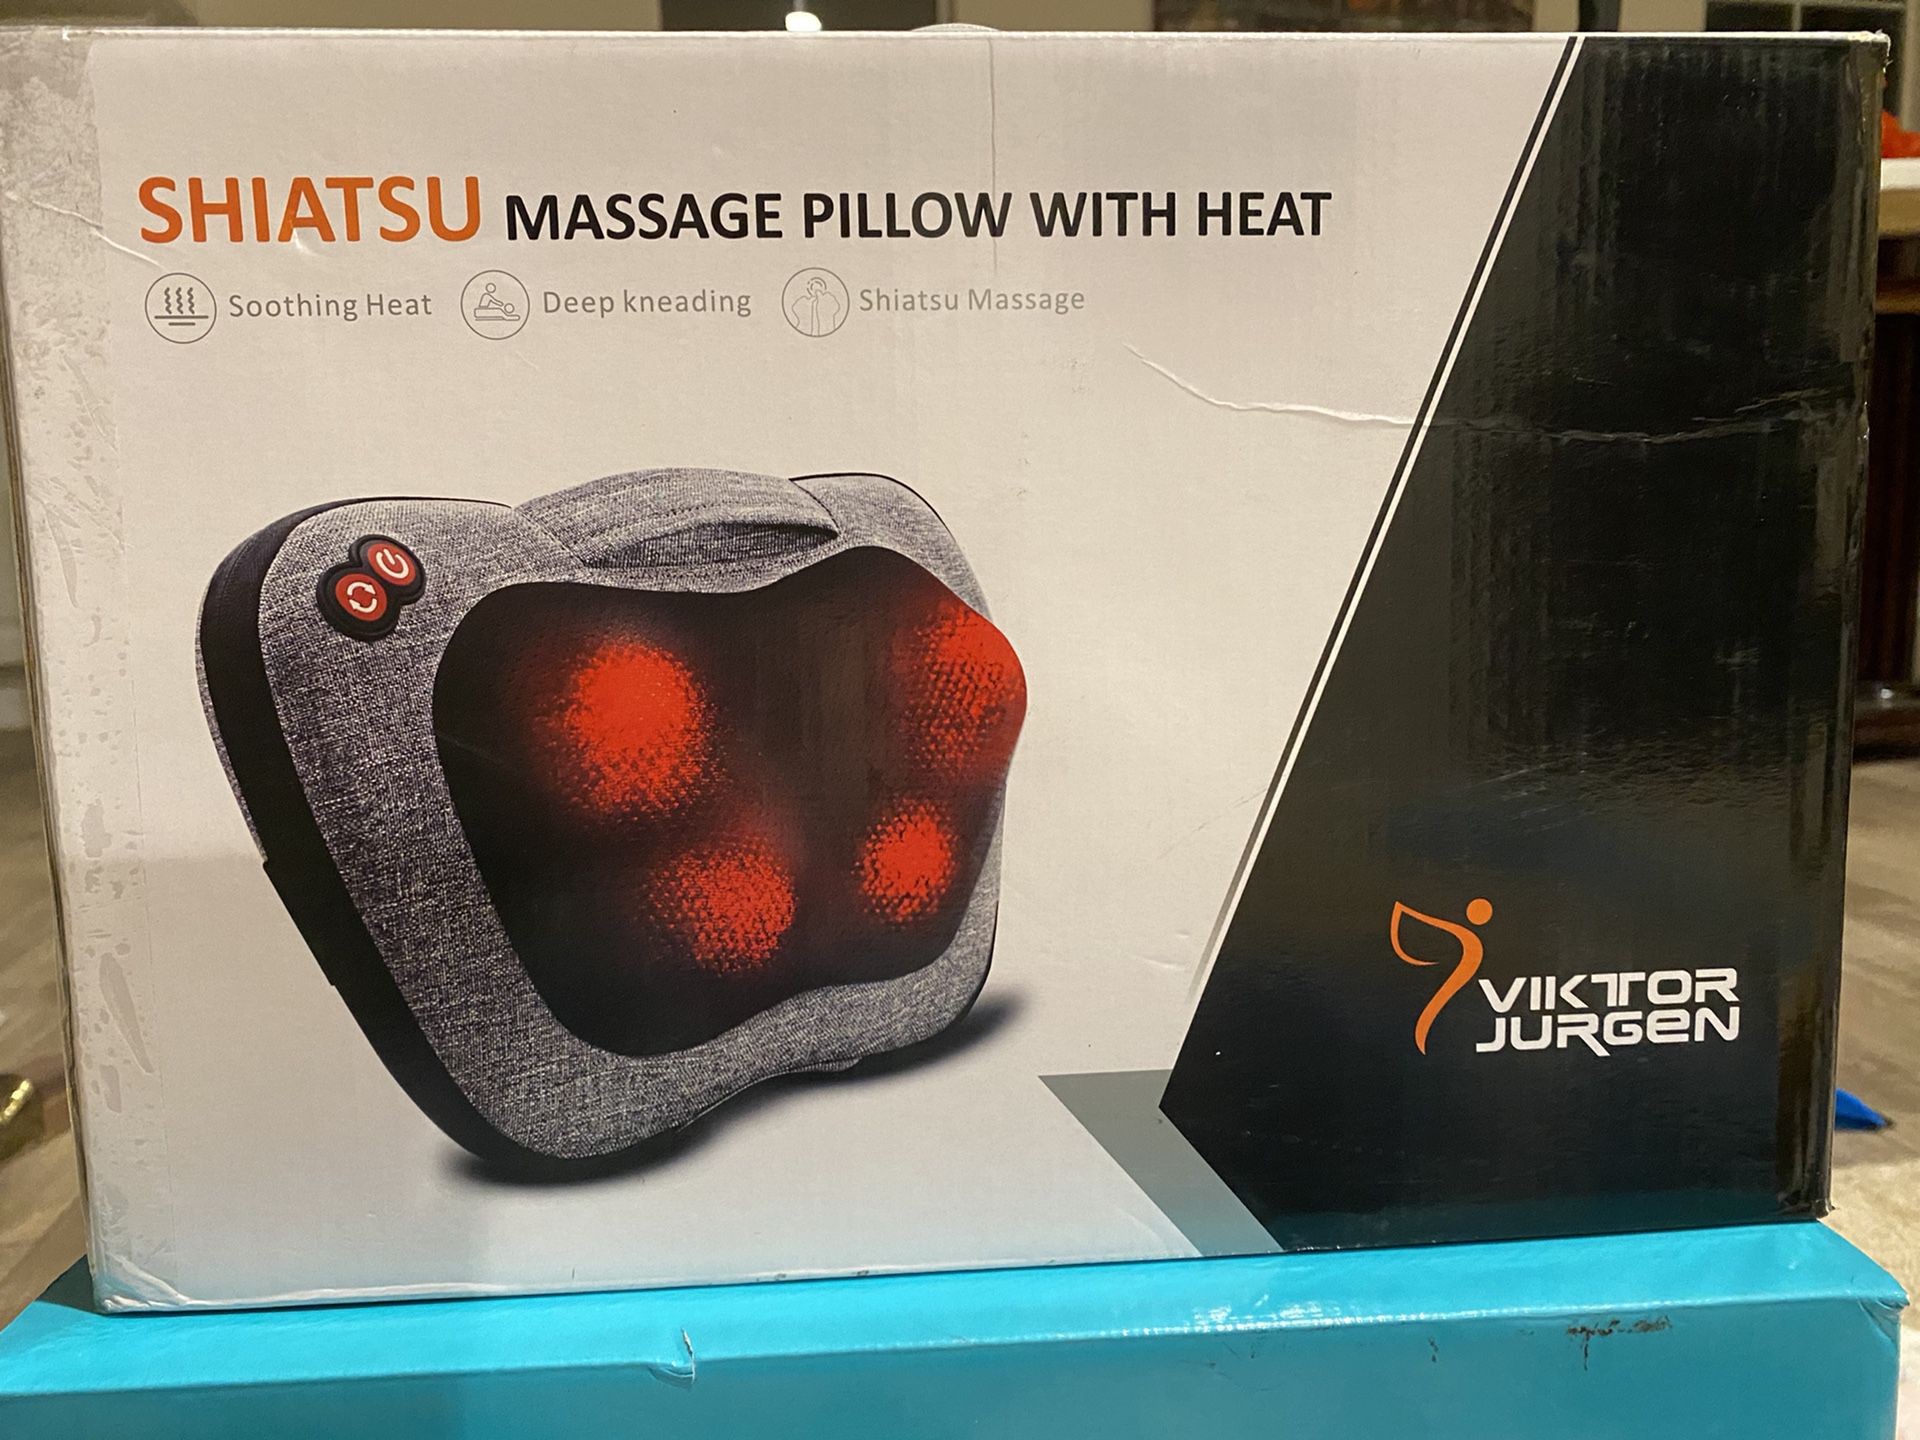 VIKTOR JURGEN Back Massager, Neck Massager with Heat, Massage Pillow Gifts  for Men & Women, Electric Shiatsu Back Massager, Deep Kneading Shoulder Mas  for Sale in Chino, CA - OfferUp